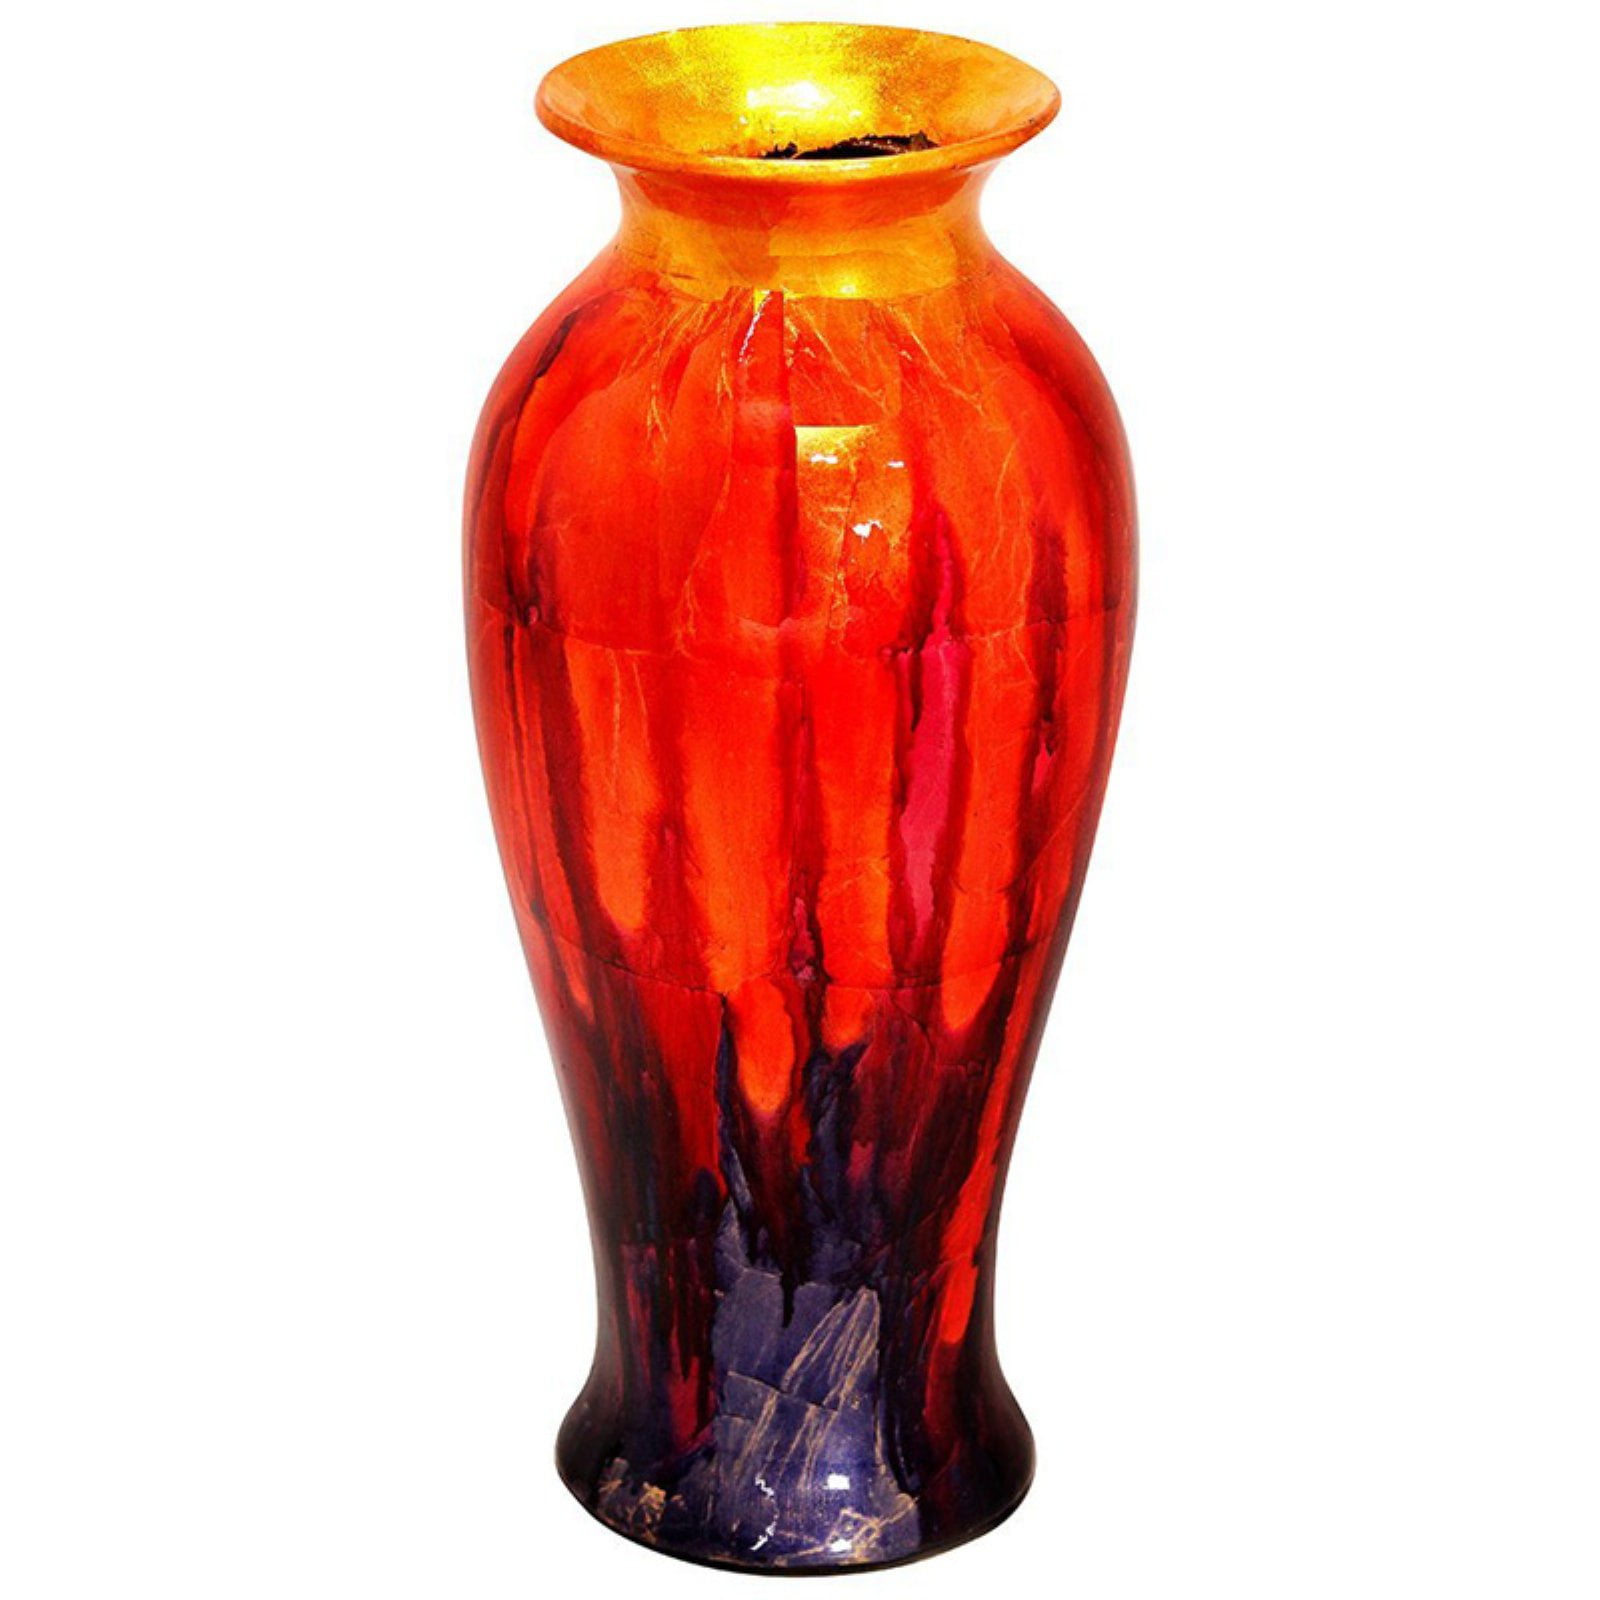 Orange Juice Vase, 2 Vase Set. Ceramic Vase and Sliced Orange Vase. Unique  Vases for Flowers. Funky Home Decor. Colorful Vintage Retro Weird Eclectic